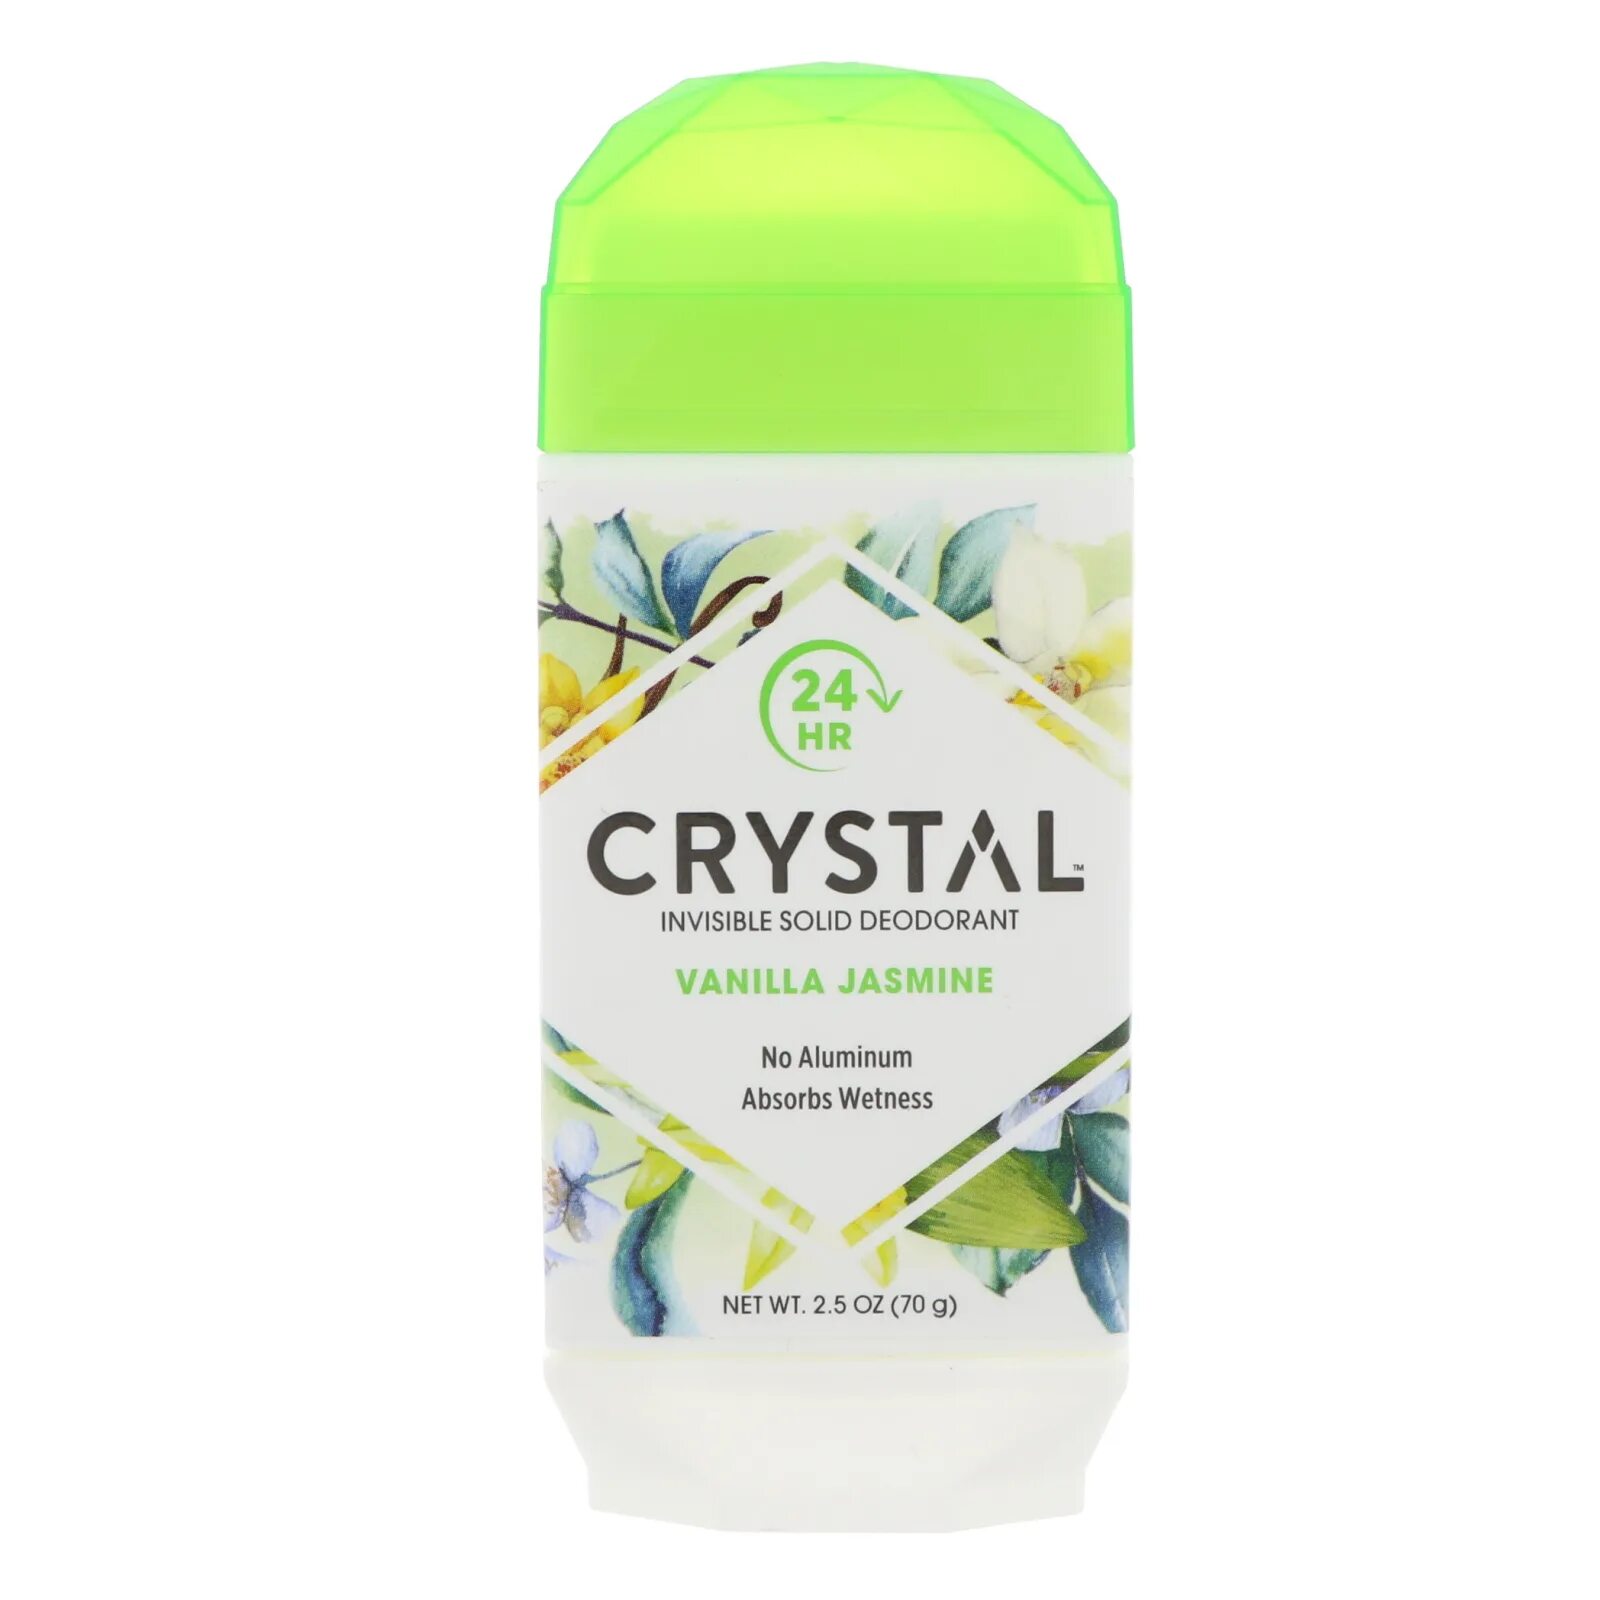 Дезодорант Crystal body Deodorant. Дезодорант Crystal Mineral-enriched. Кристал дезодорант Кристалл. Secret Jasmine дезодорант.